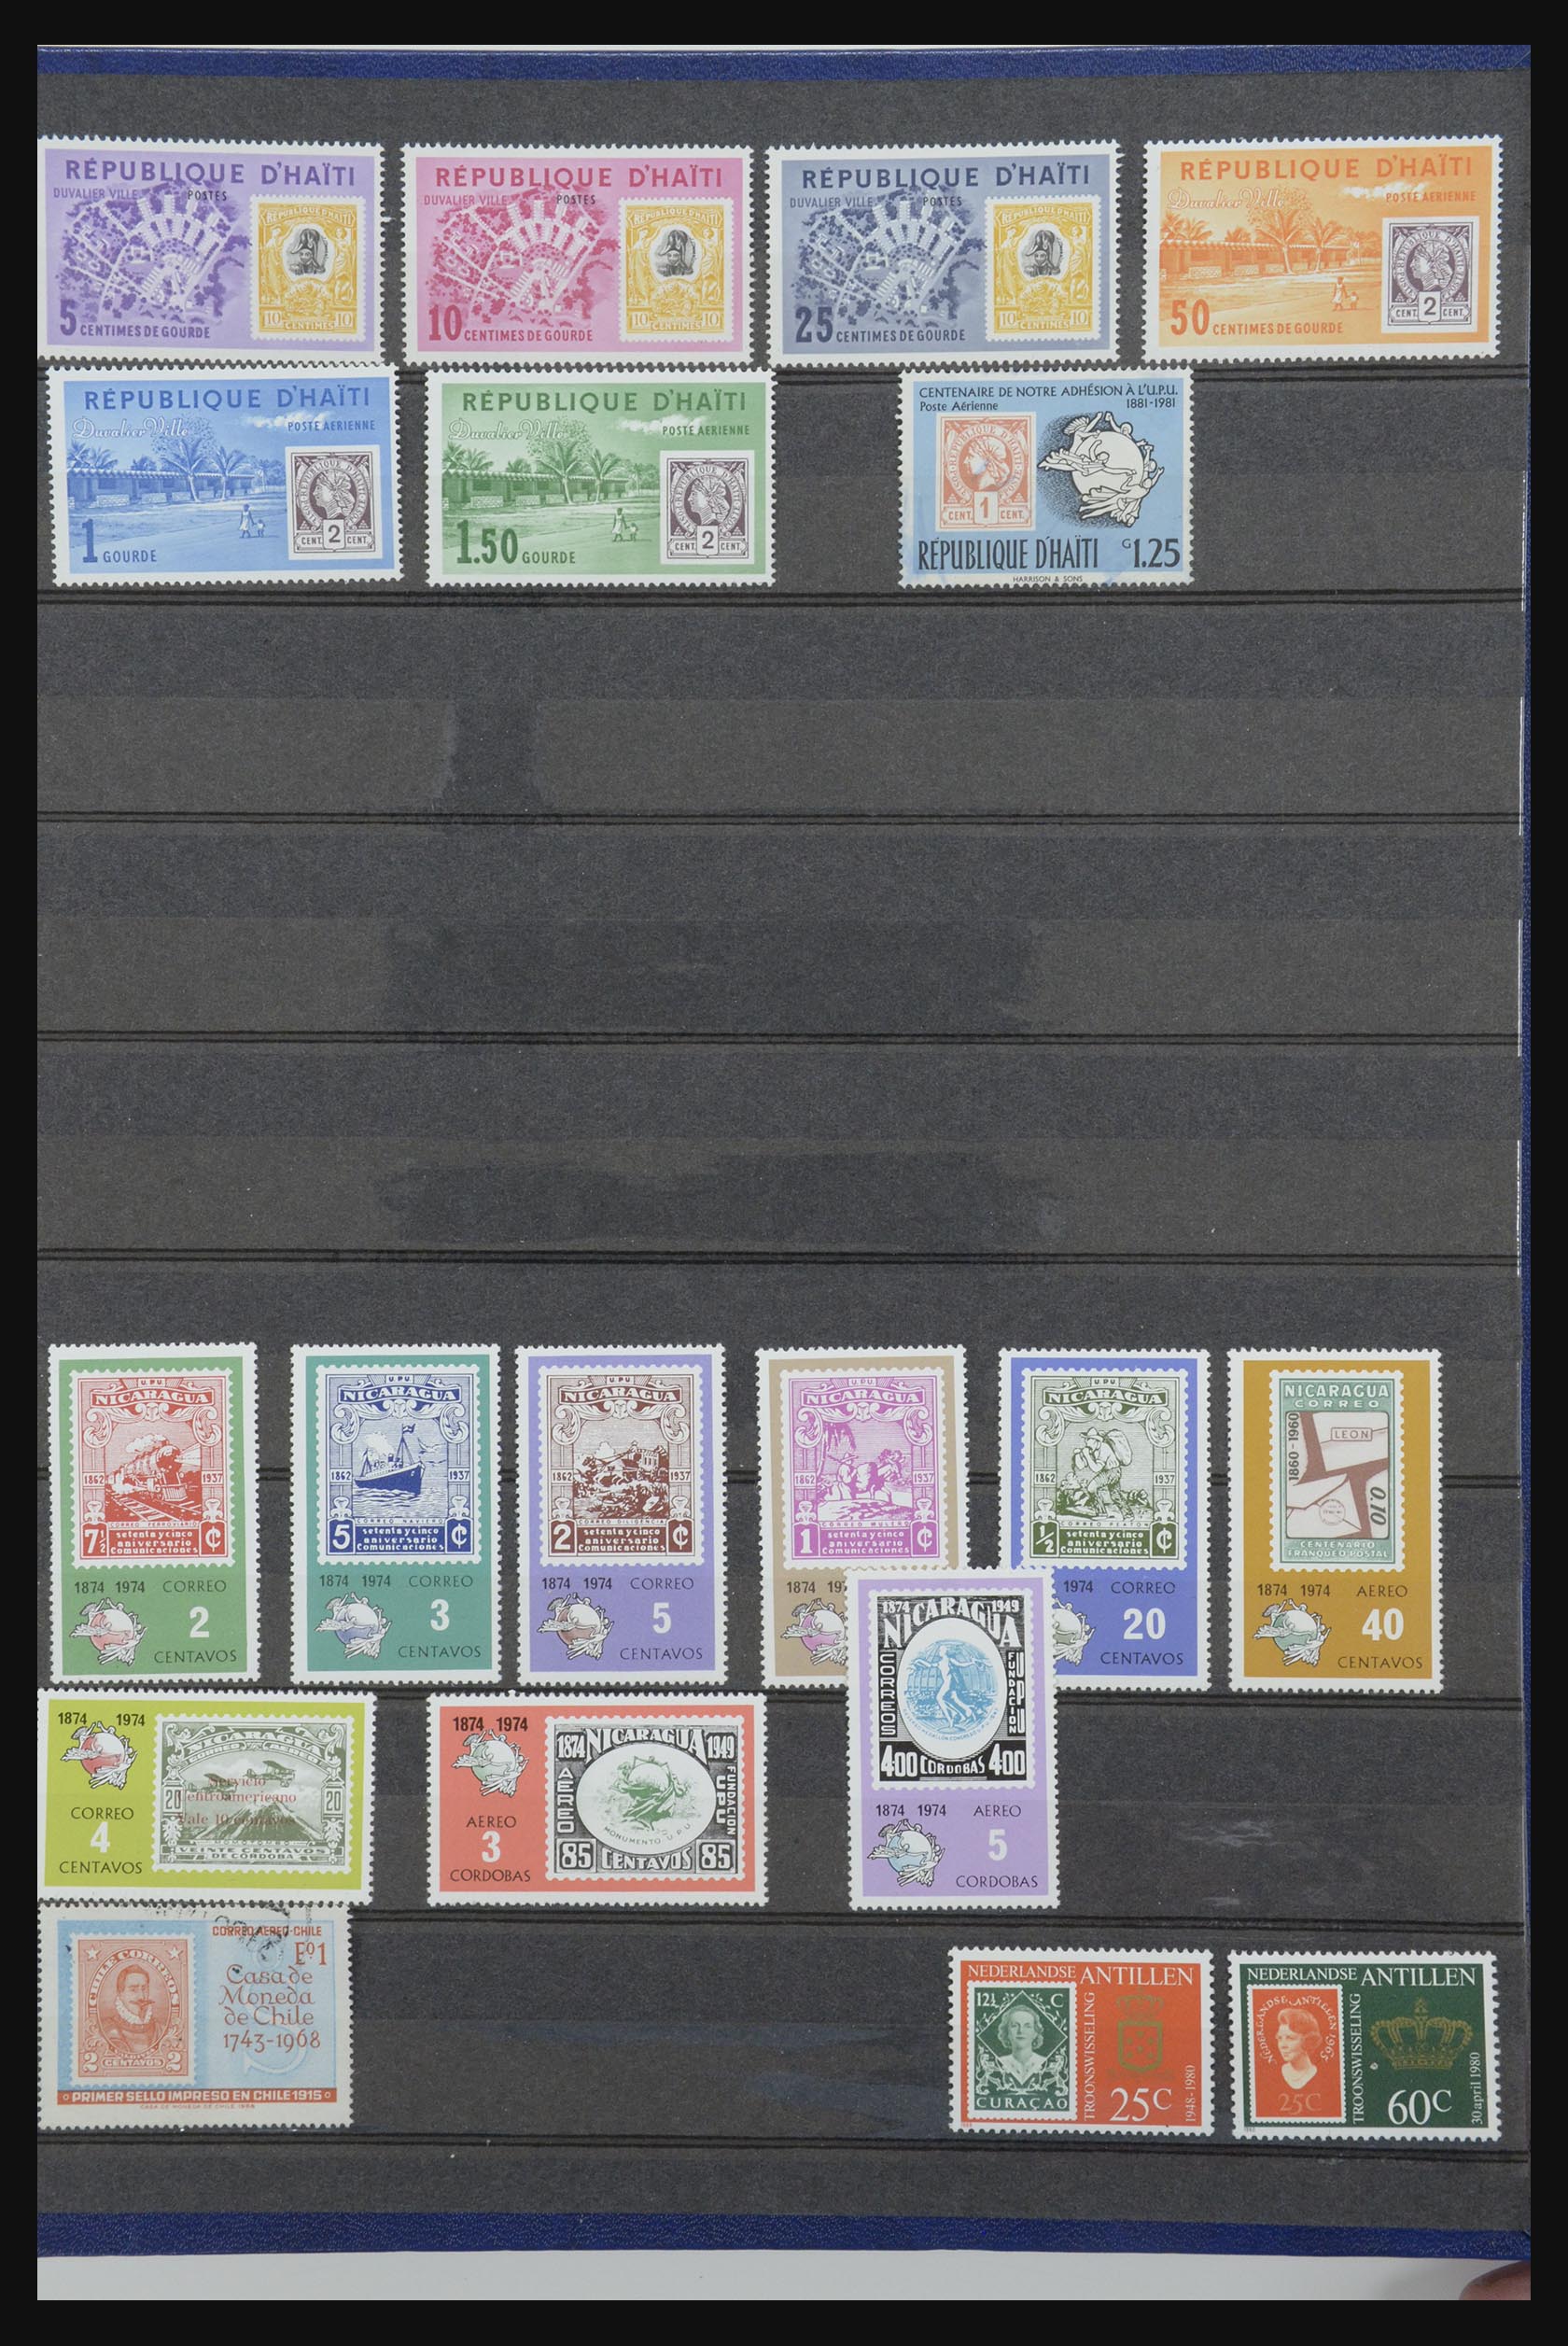 31652 052 - 31652 Motief: postzegel op postzegel 1940-1993.